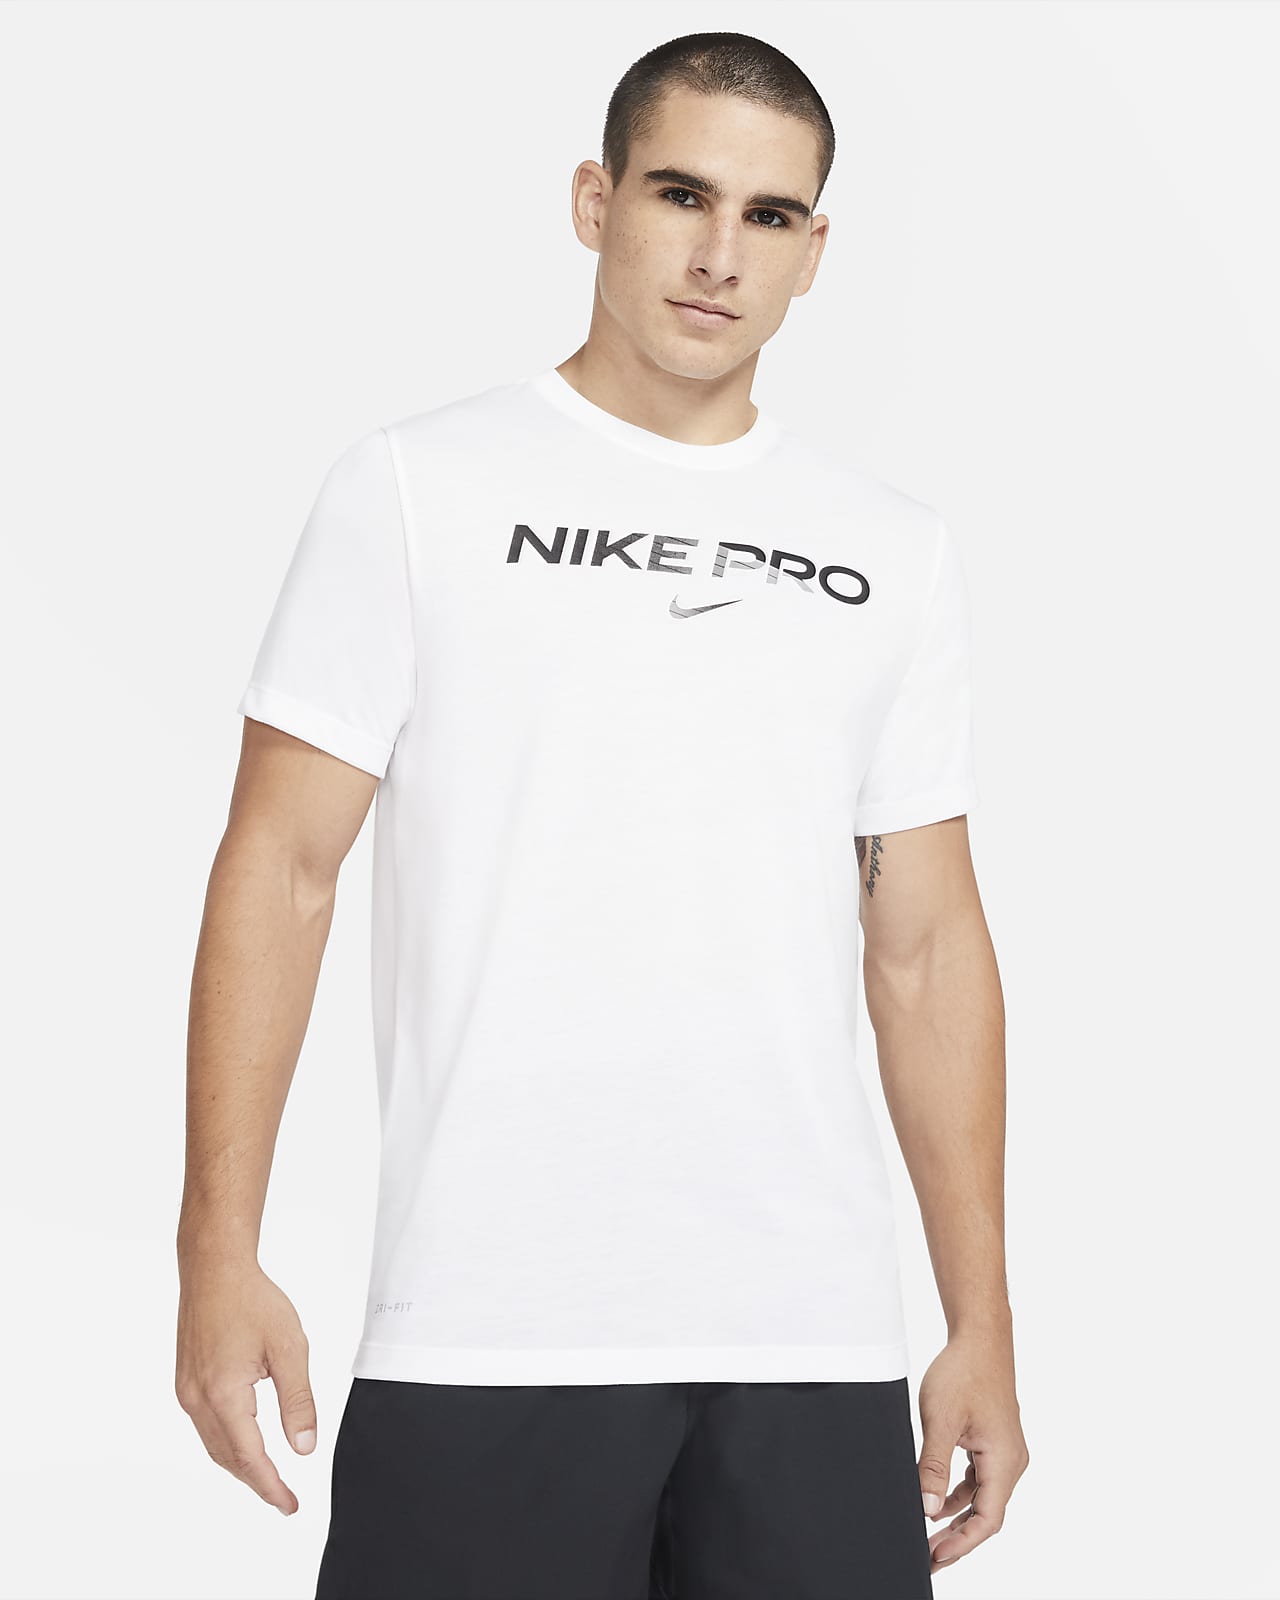 Nike Pro Men's T-Shirt. Nike LU